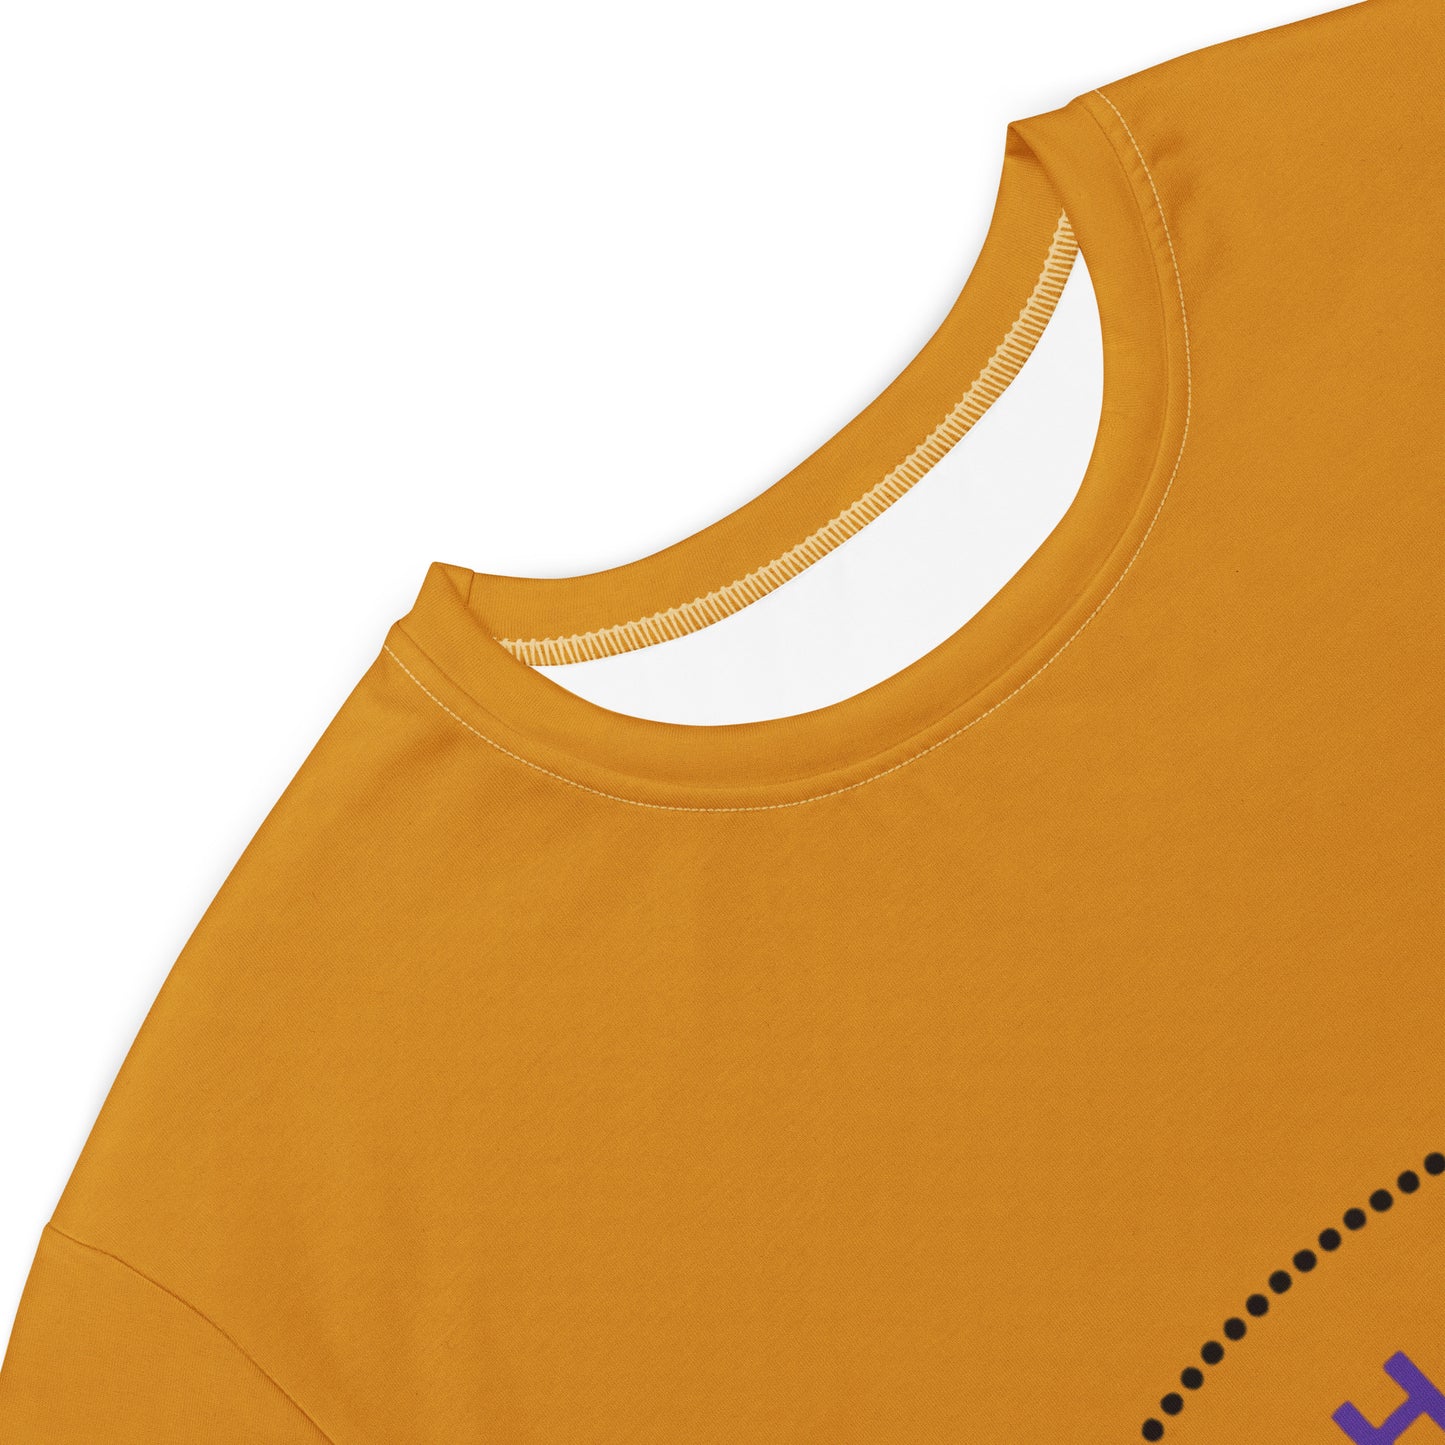 Goldie Babe | T-shirt dress